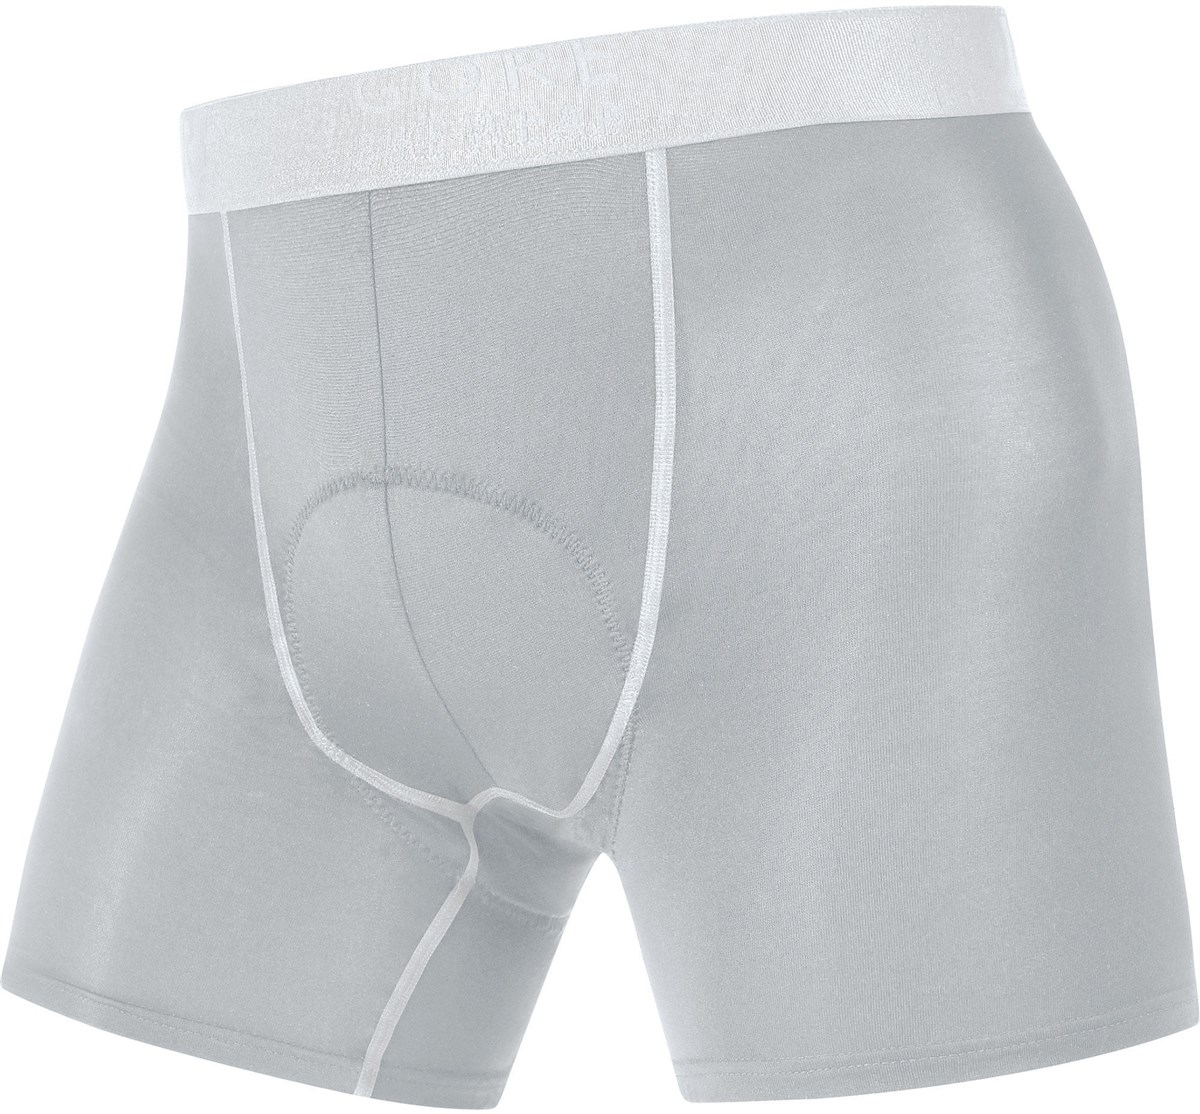 Gore Base Layer Boxer Shorts+ AW17 product image